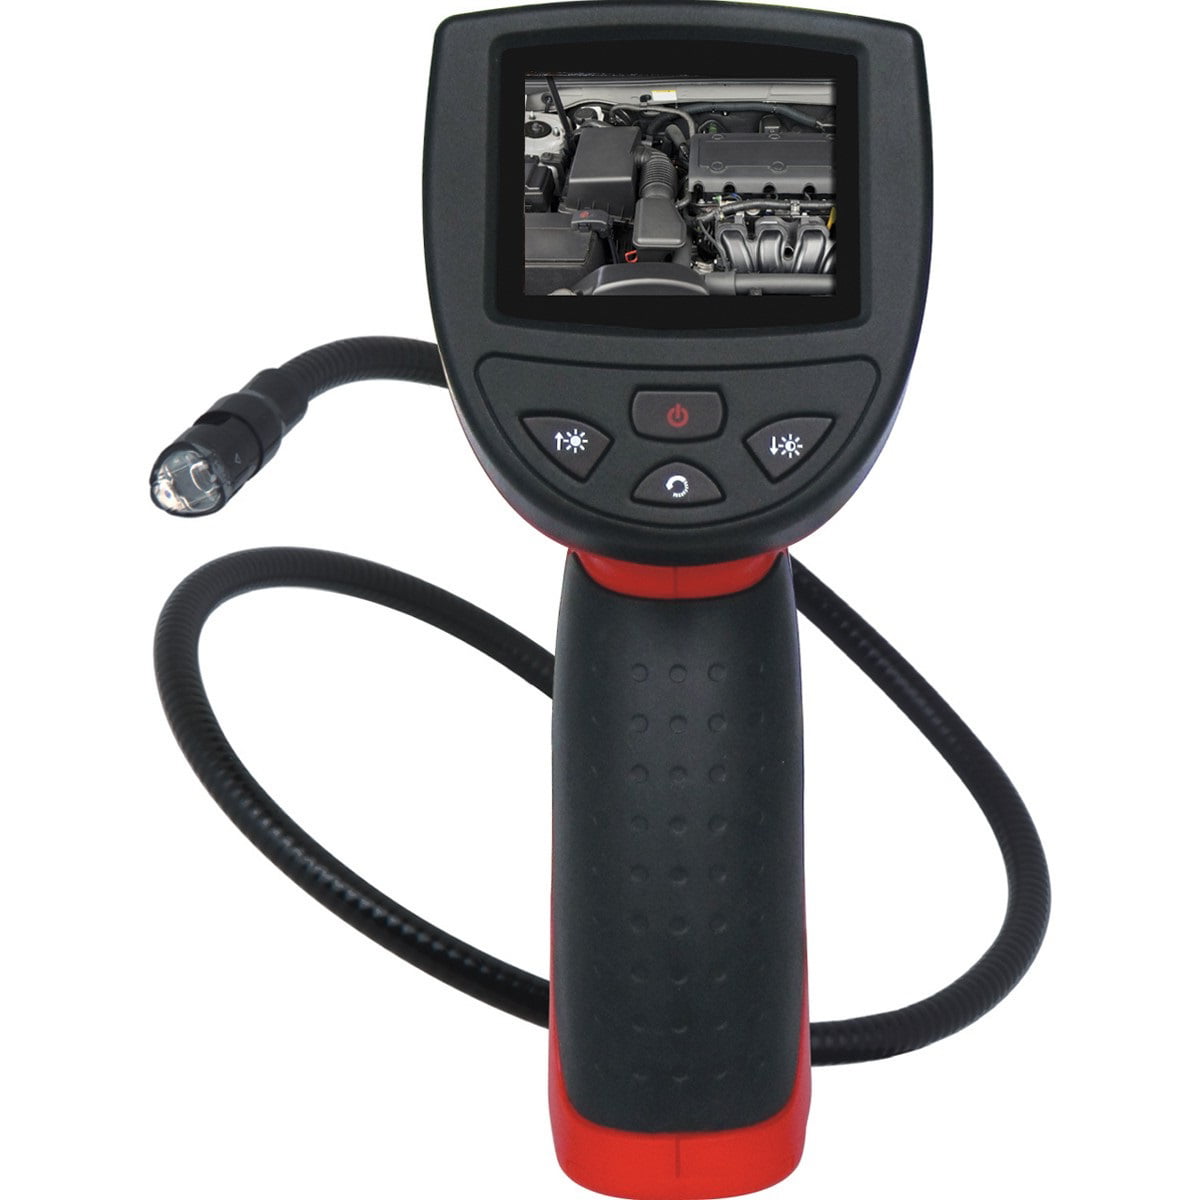 Cen-tech Digital Inspection Camera Lcd Borescope 8 12mm Waterproof 62359 - Walmartcom